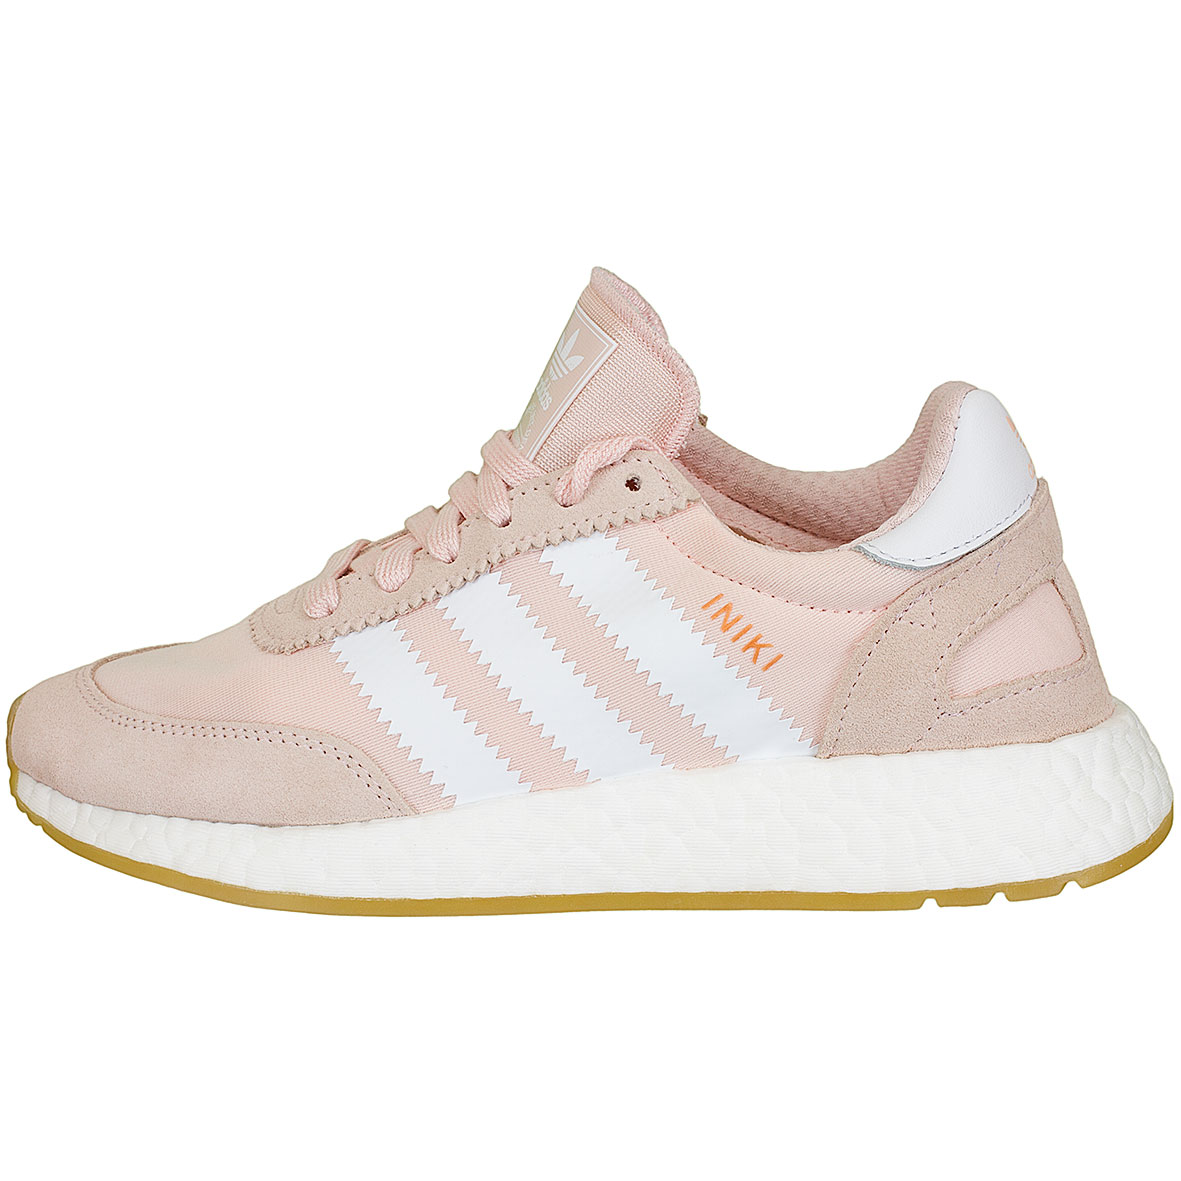 ☆ Adidas Originals Damen Sneaker Iniki Runner pink/weiß - hier bestellen!